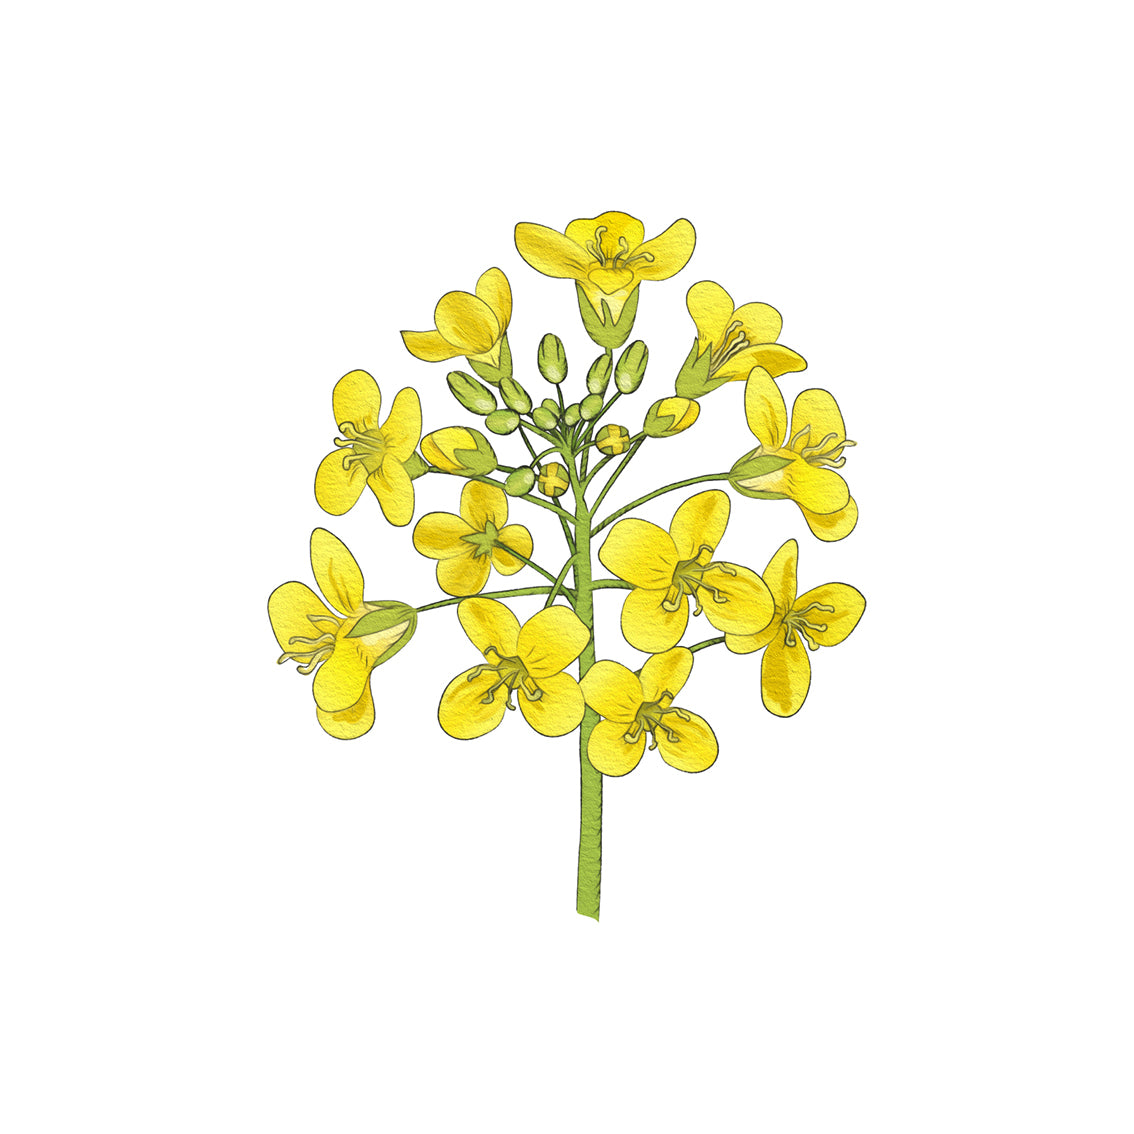 En levande gul Kallpressad rapsolja blomma på en ren vit alexphilfood bakgrund.